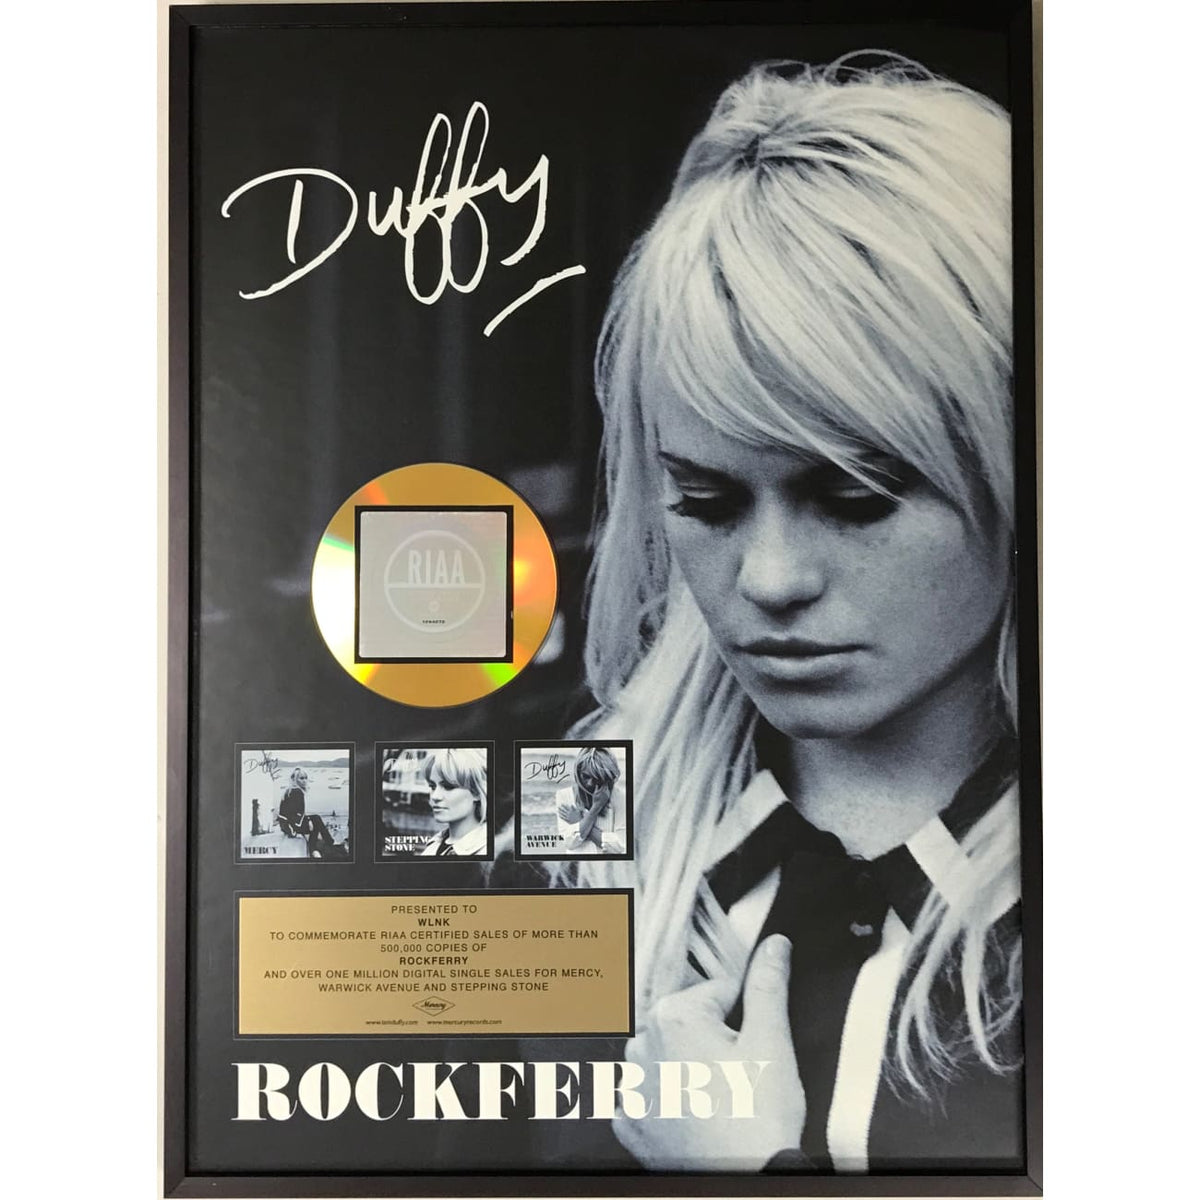 musicgoldmine.com - Duffy Rockferry Combo Album/Singles RIAA Gold Award –